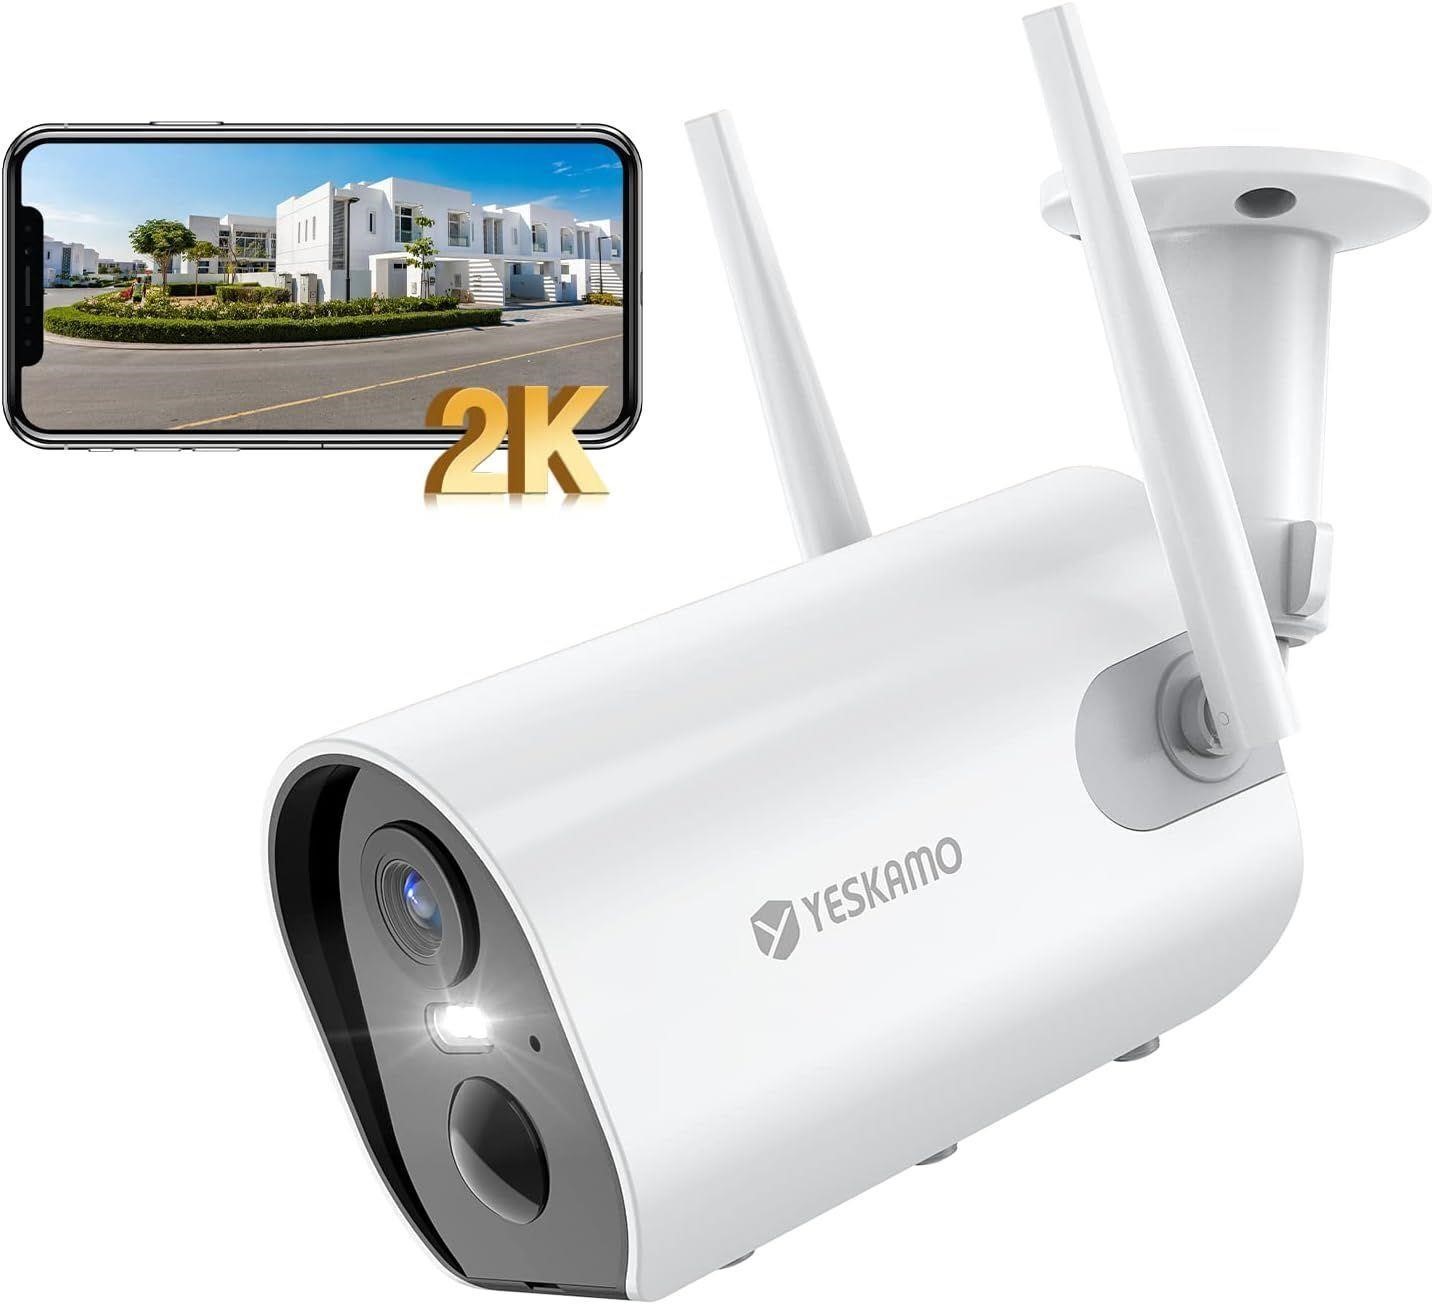 2K Wireless Outdoor Security Camera